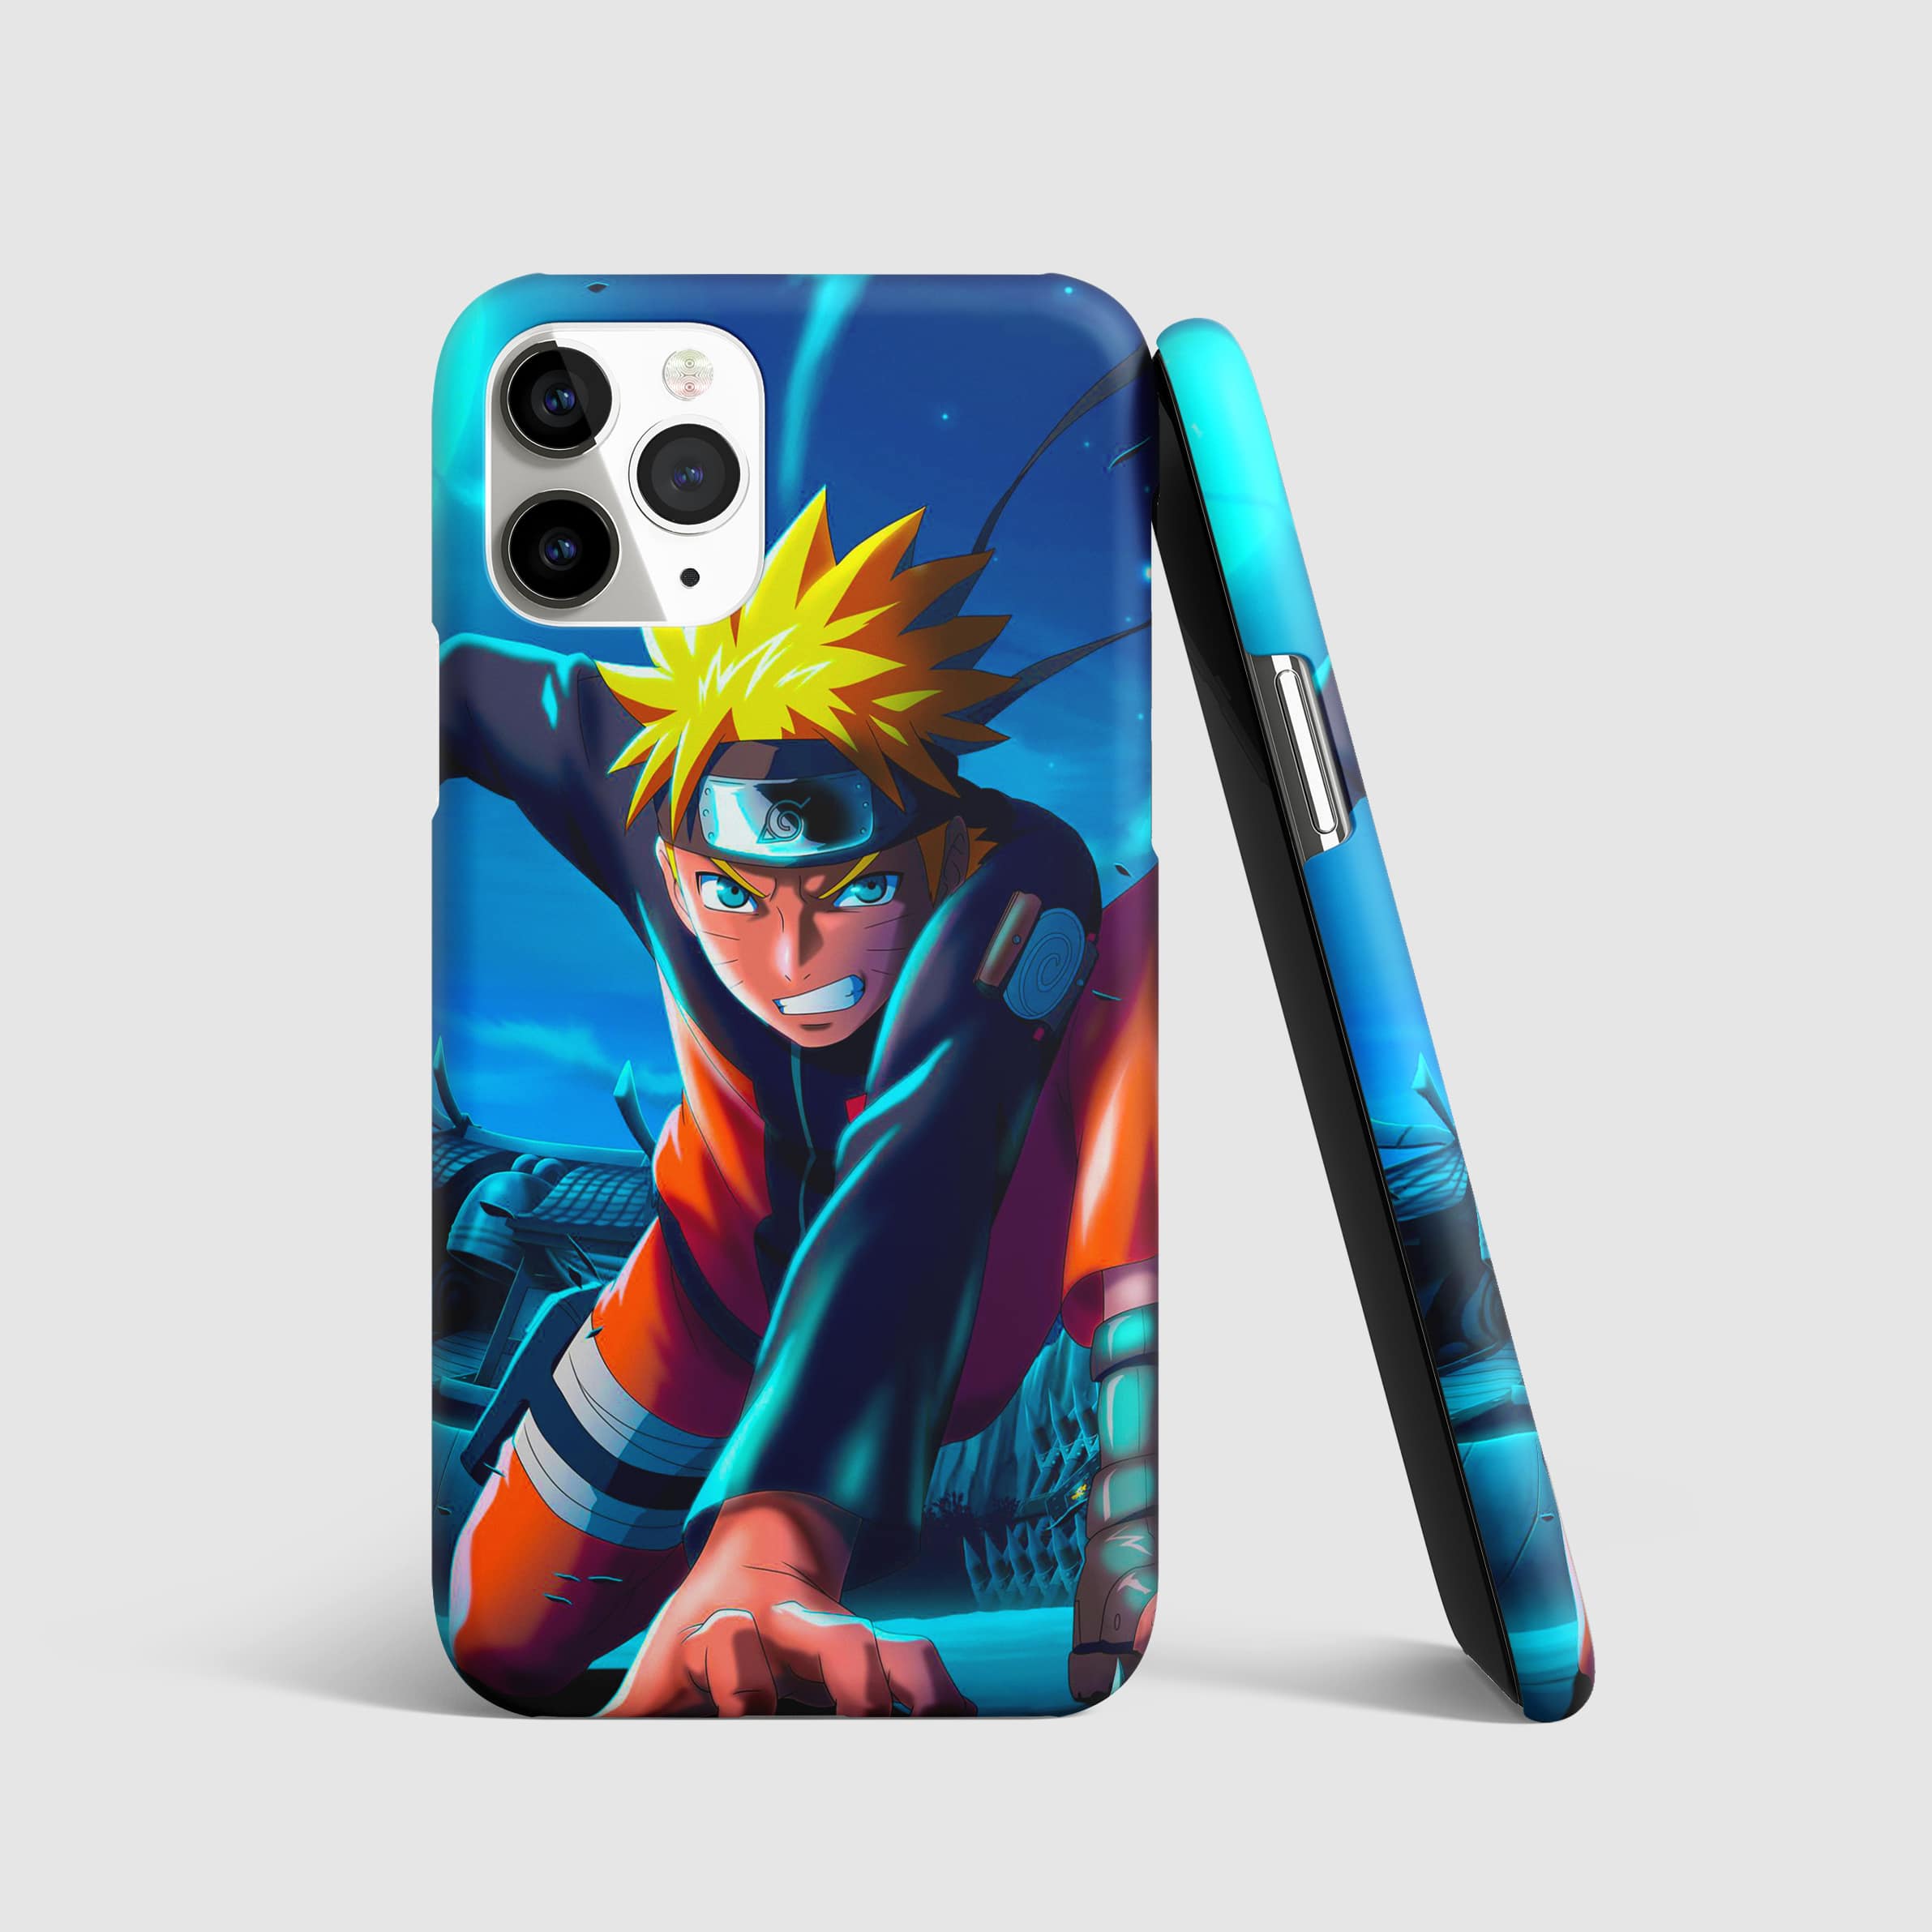 Naruto Ninjutsu Phone Cover with 3D matte finish, featuring the iconic ninjutsu design.